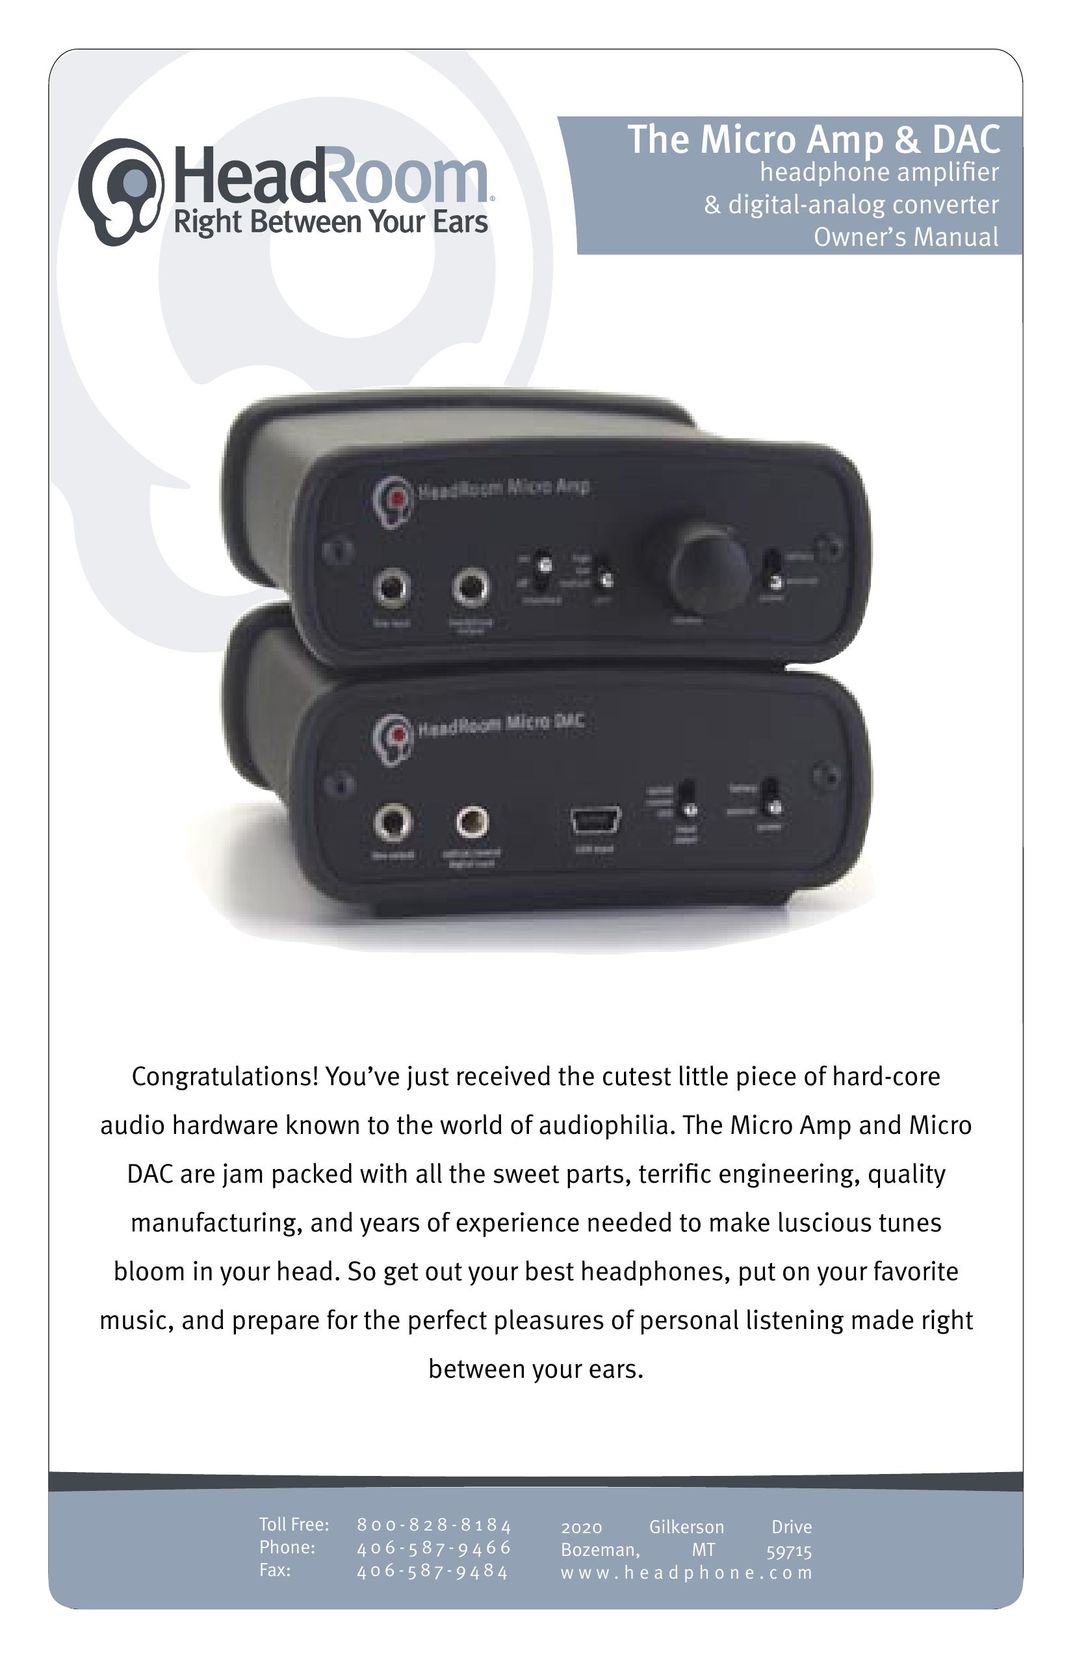 HeadRoom Headphone Amplifier & Digital-Analog Converter Stereo Amplifier User Manual